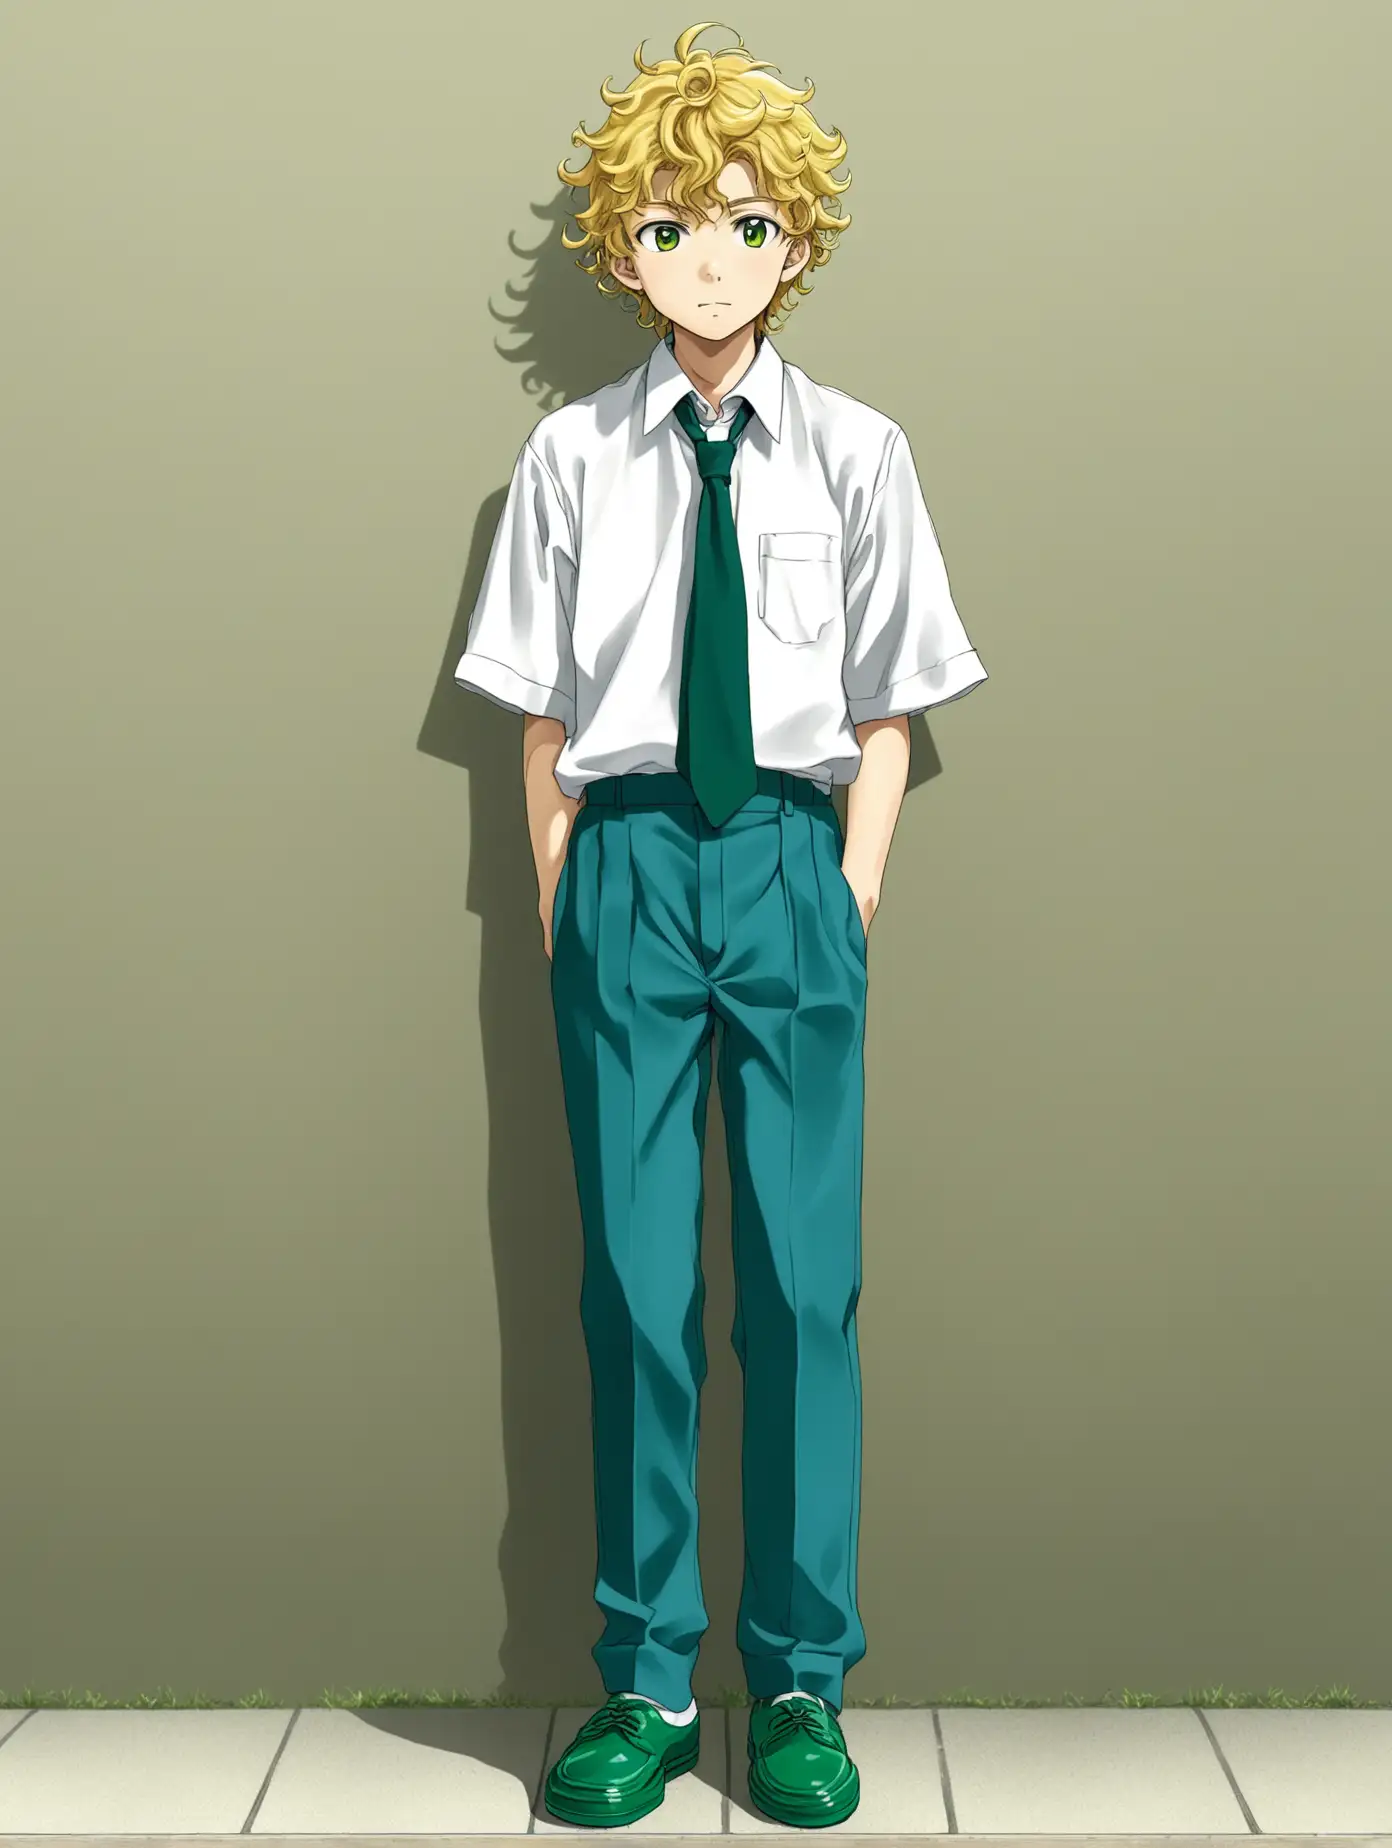 pria jepang menggunakan seragam sekolah hijau berusia 16 tahun, berambut kuning bergelombang, menggunakan sepatu hijau, celana panjang biru